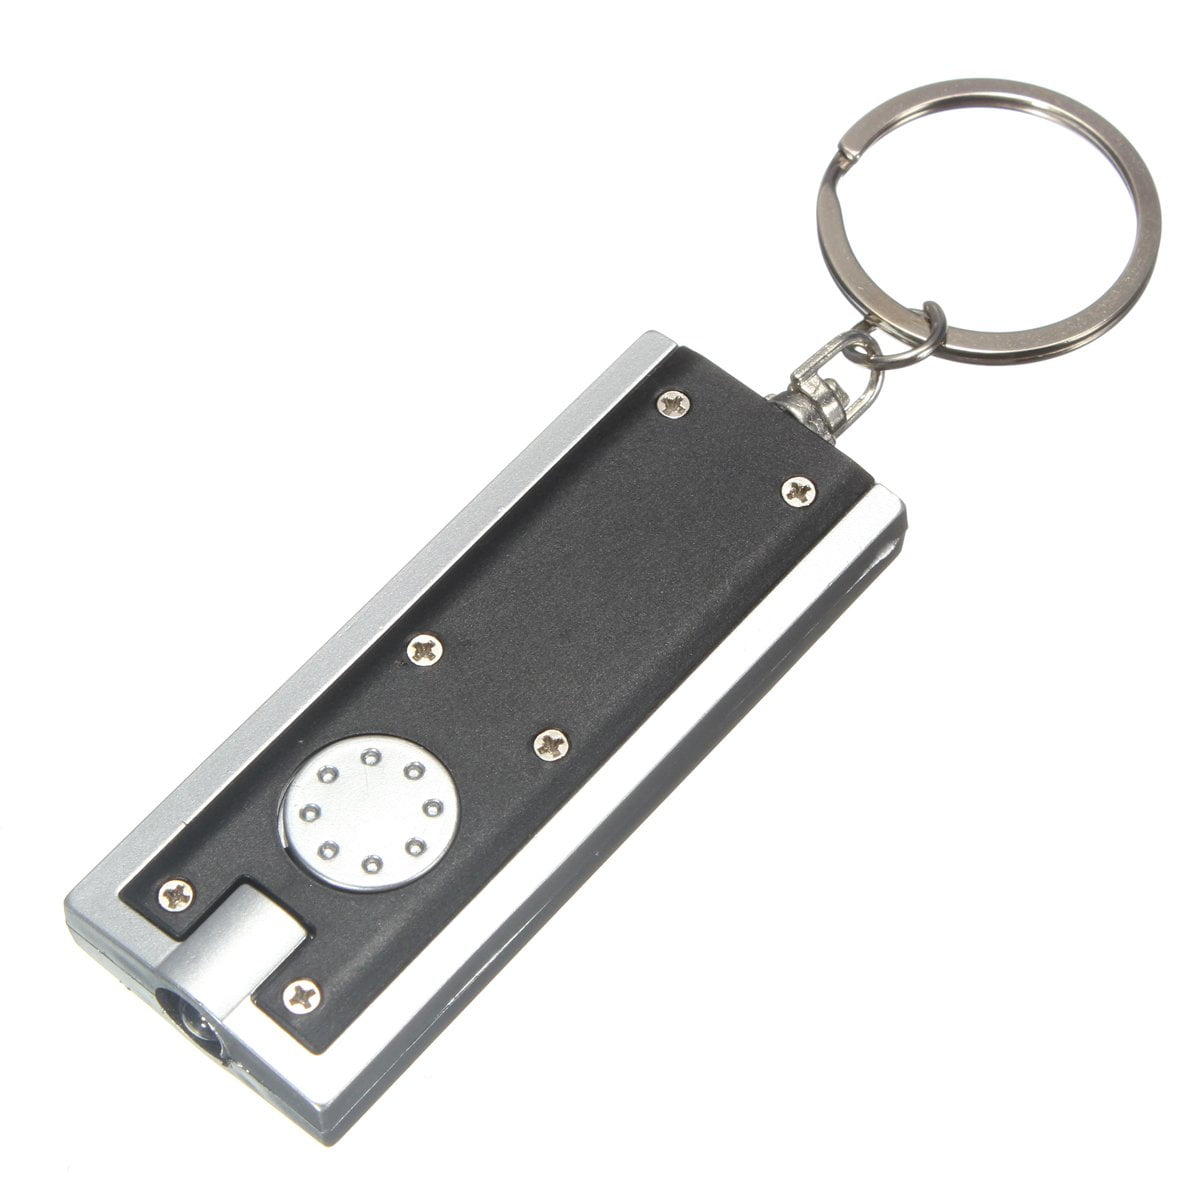 10 Mini LED Flashlight Sticks Keychain Key Ring Camping Home Safety Light 